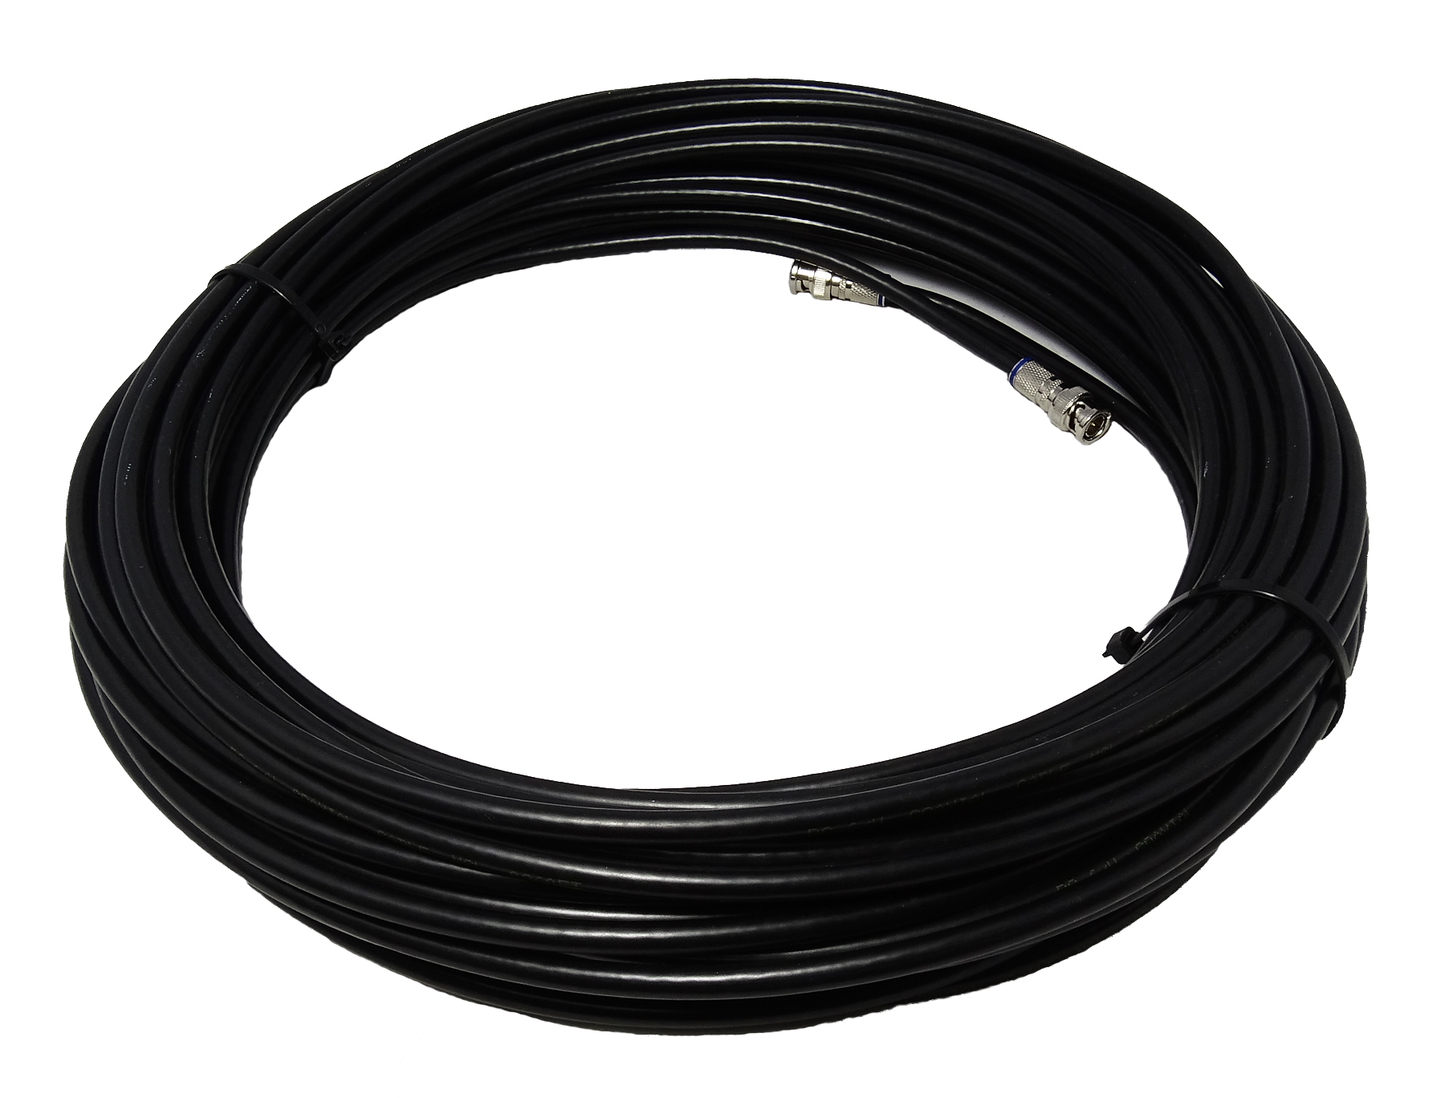 RiteAV - 150FT BNC Video Cable HD/SDI Digital Video - 75 Ohm (Indoor & Outdoor Rated) - Compression Connectors